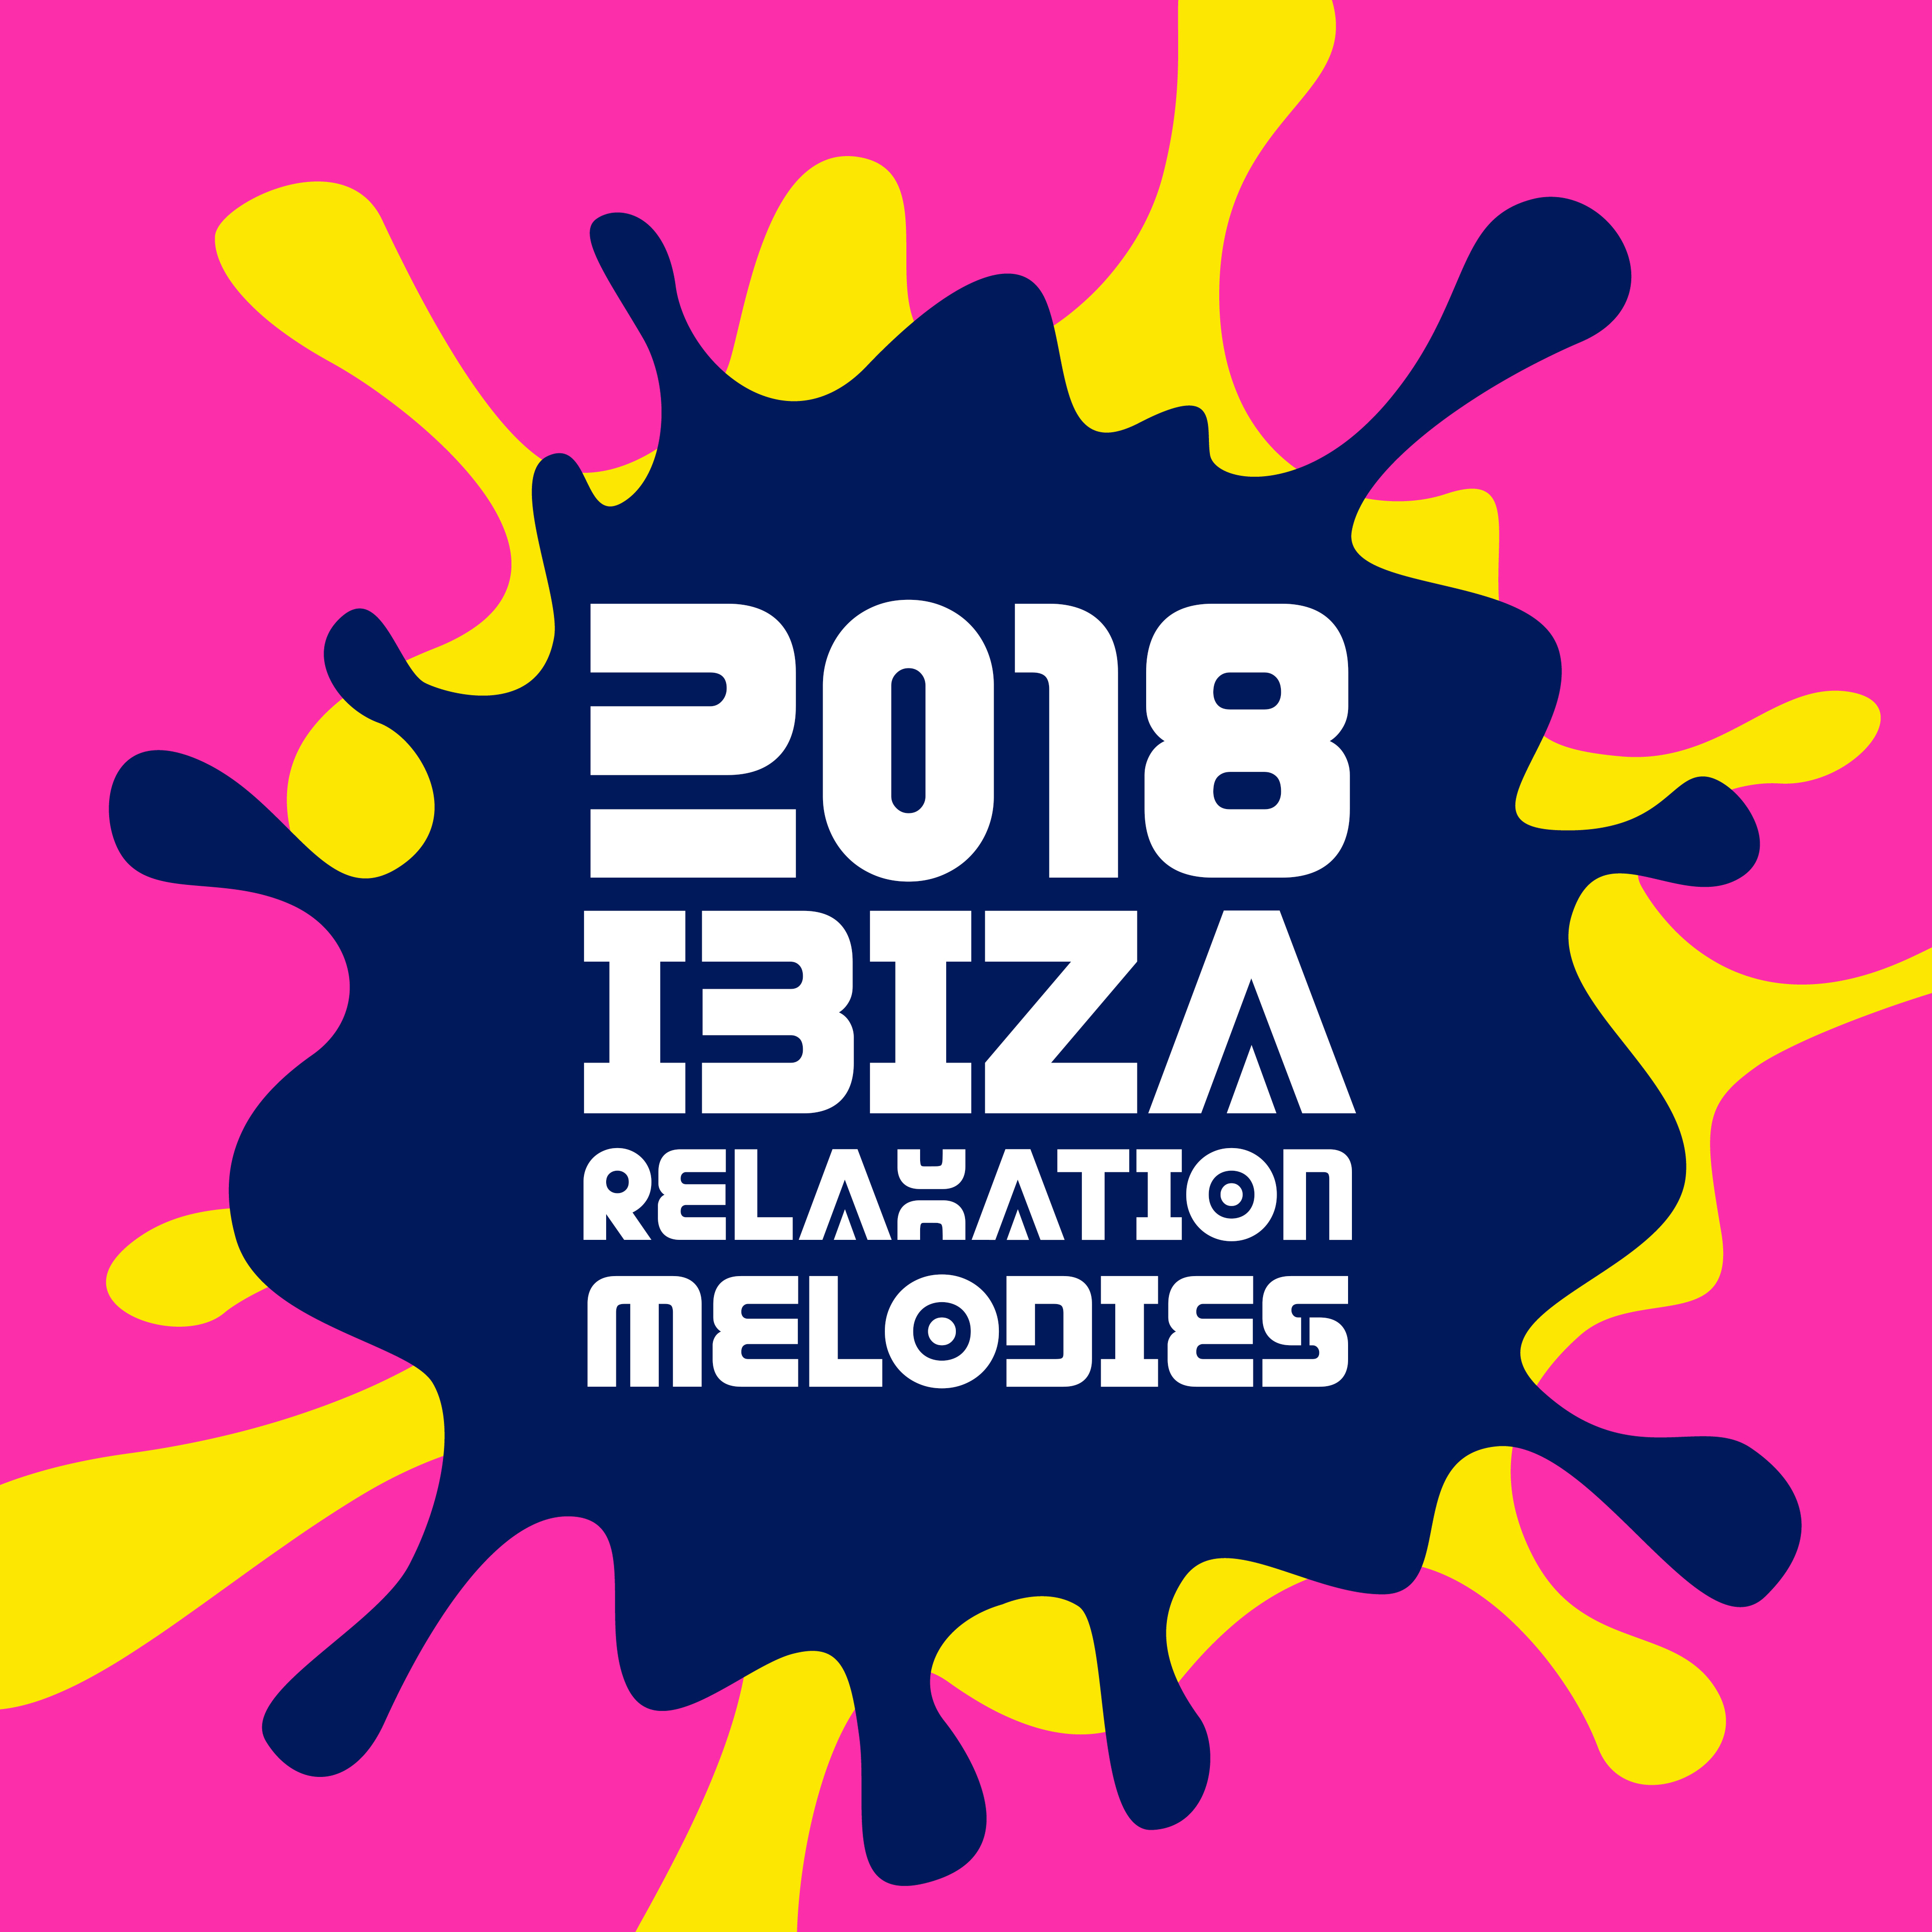 2018 Ibiza Relaxation Melodies